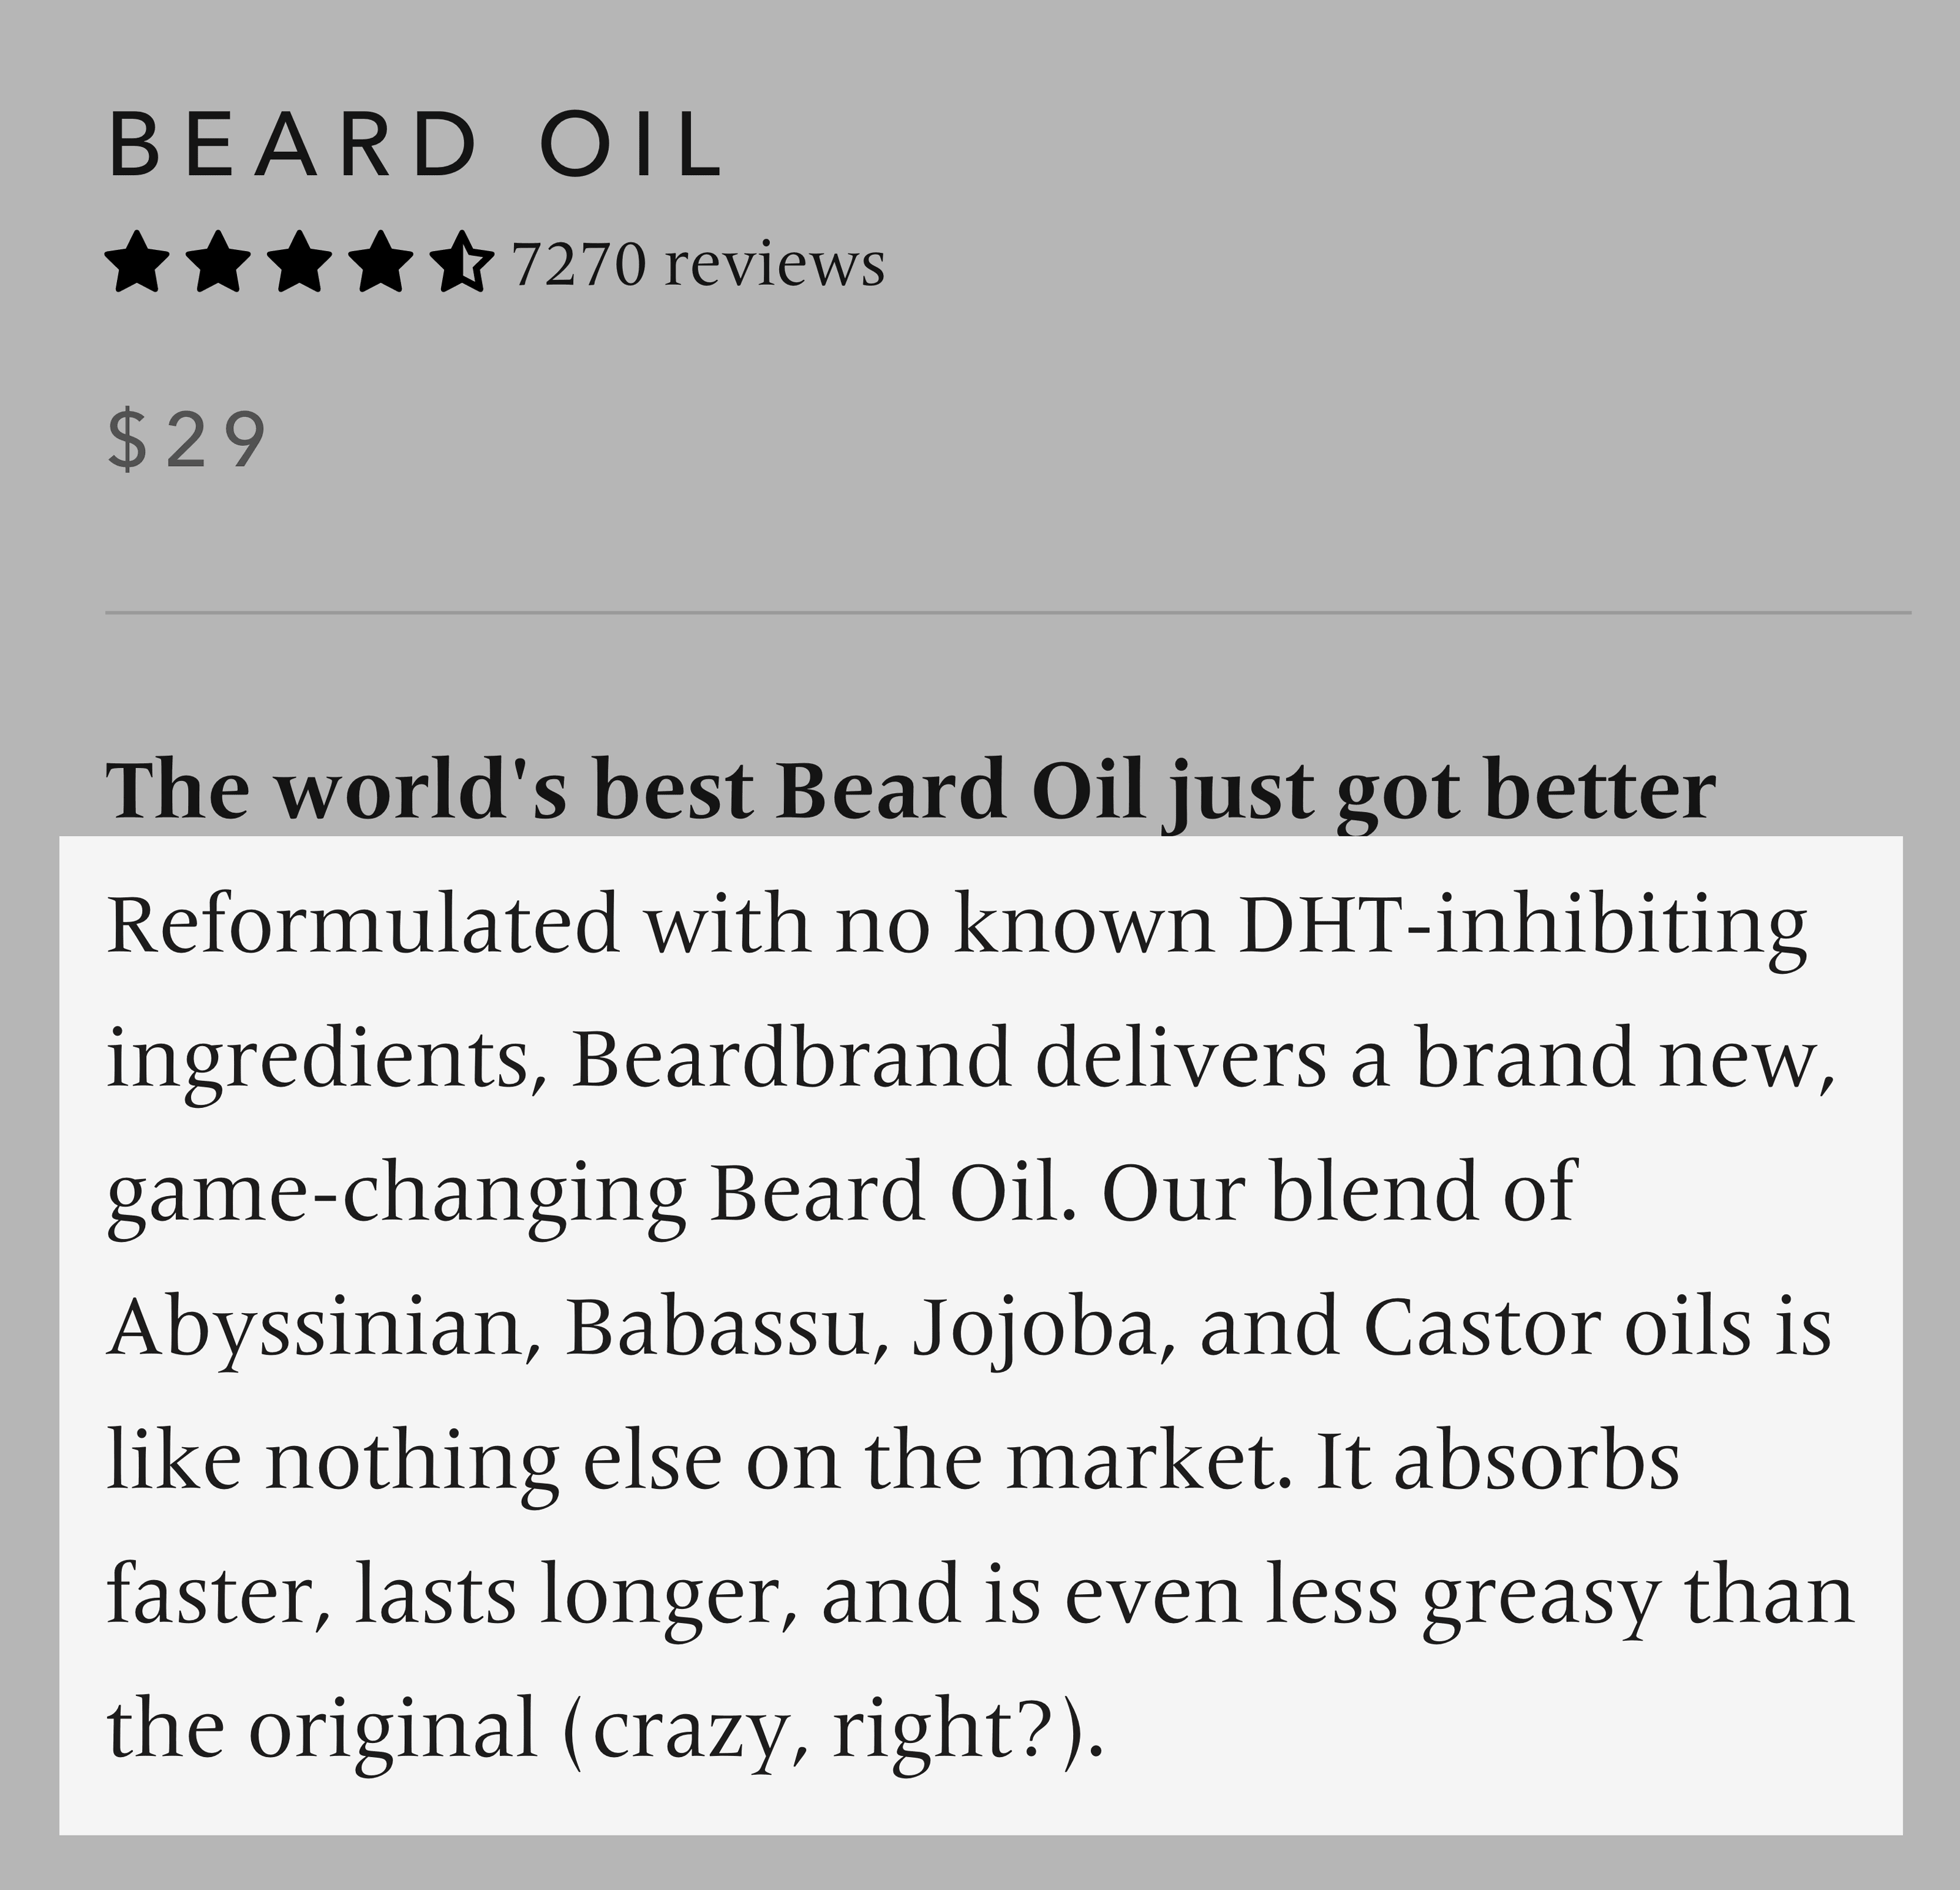 Beardbrand – Beard Oil Product Page Description